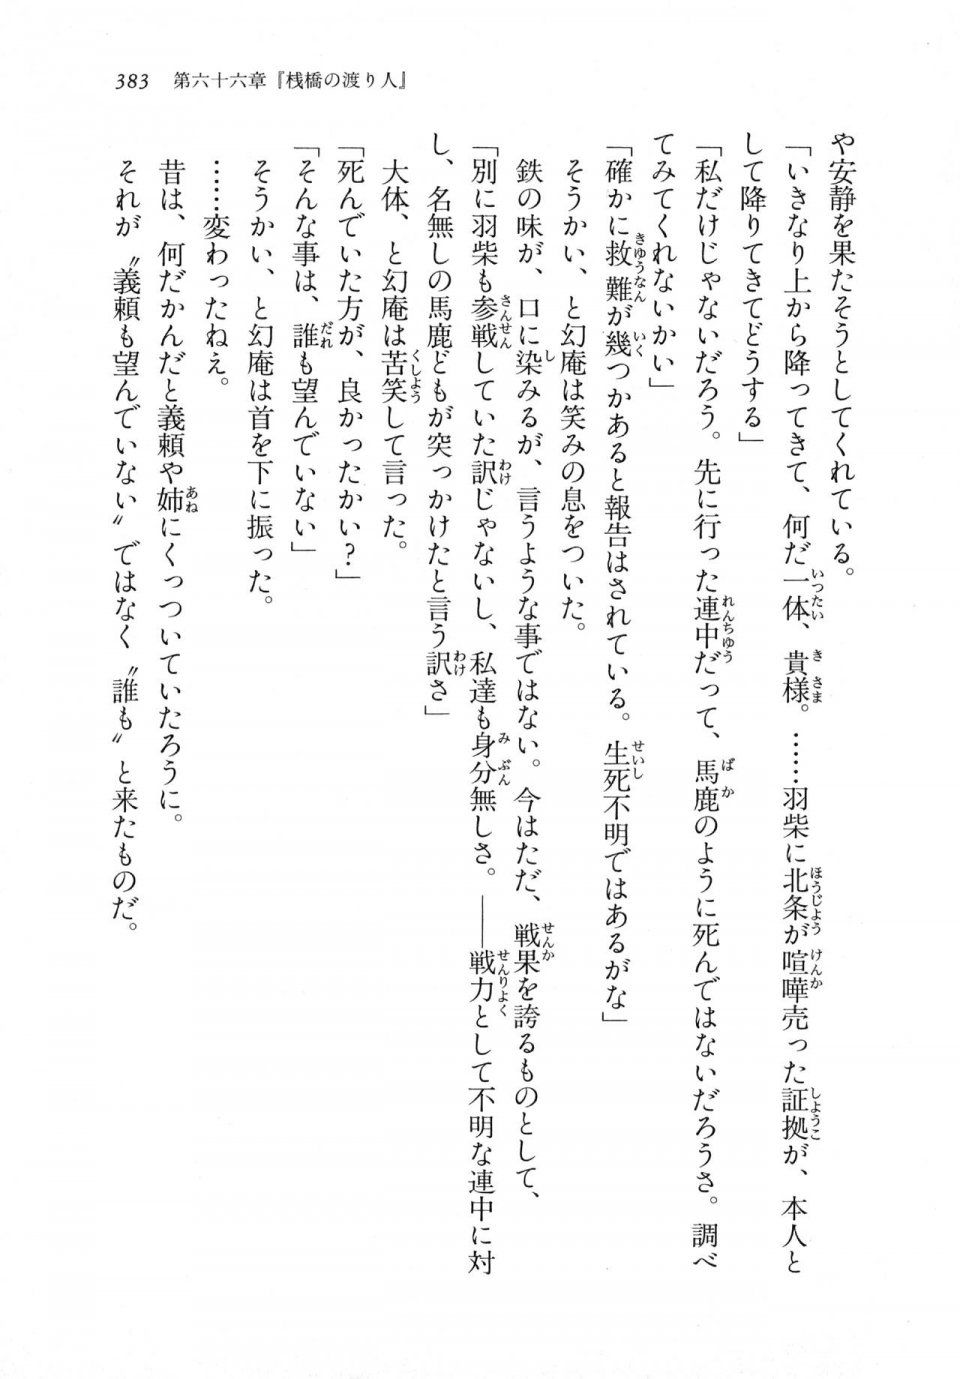 Kyoukai Senjou no Horizon LN Vol 18(7C) Part 1 - Photo #383